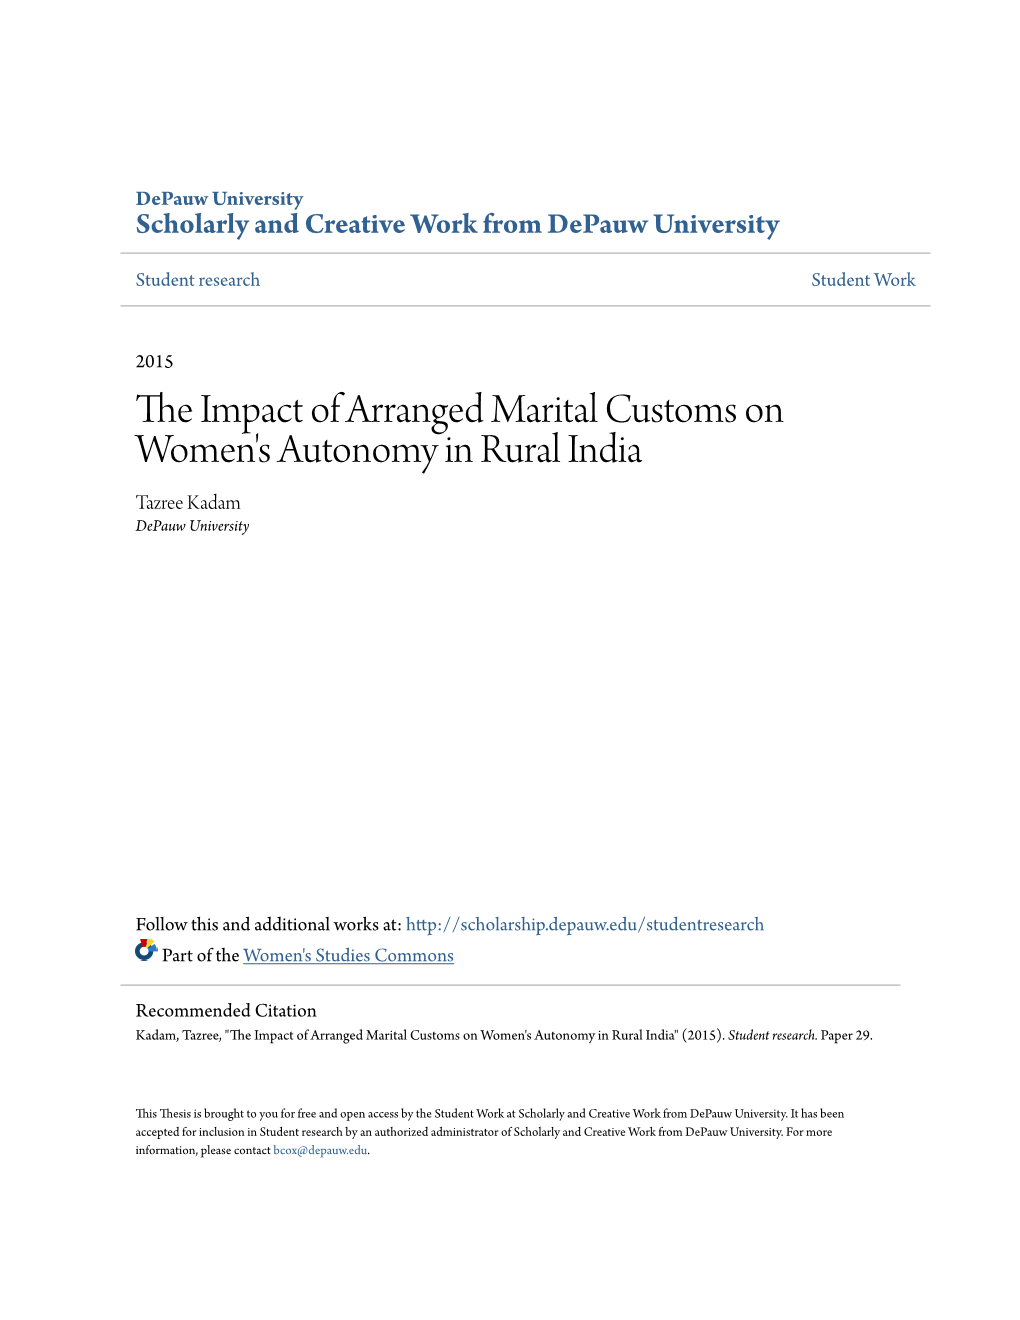 The Impact of Arranged Marital Customs on Women's Autonomy in Rural India